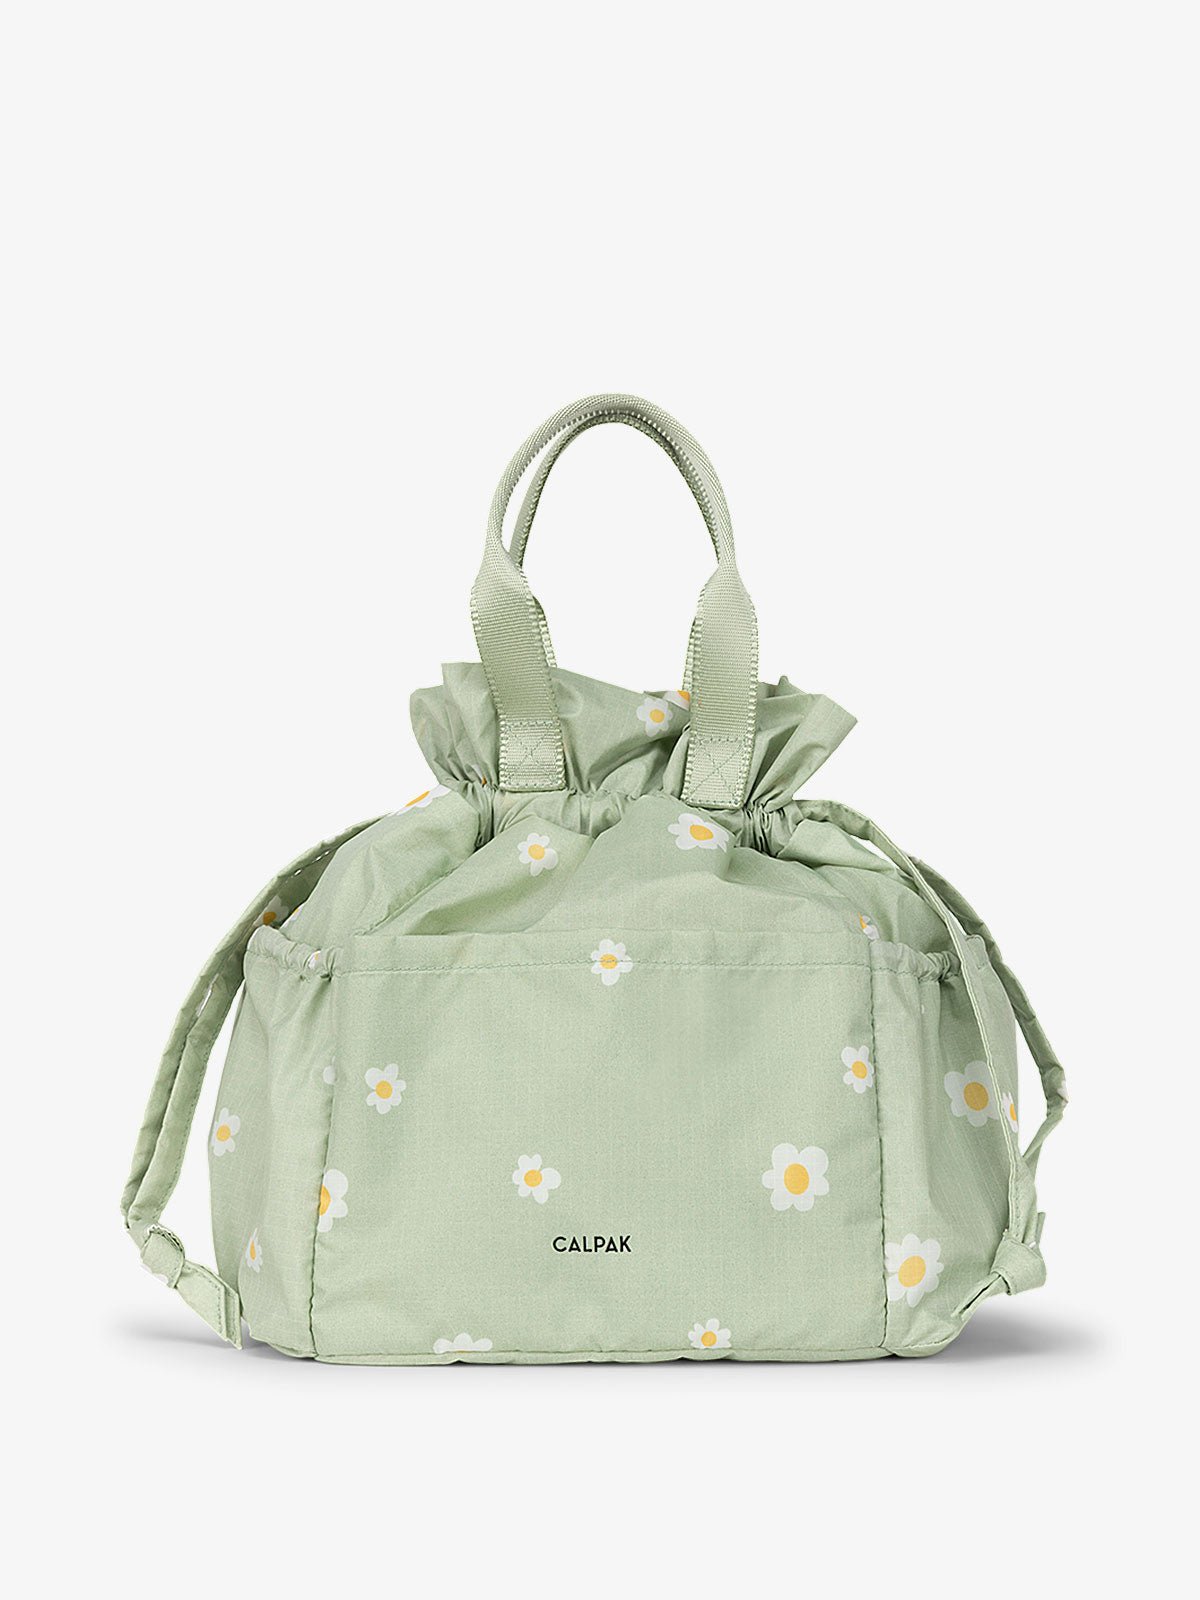 green lunch bag